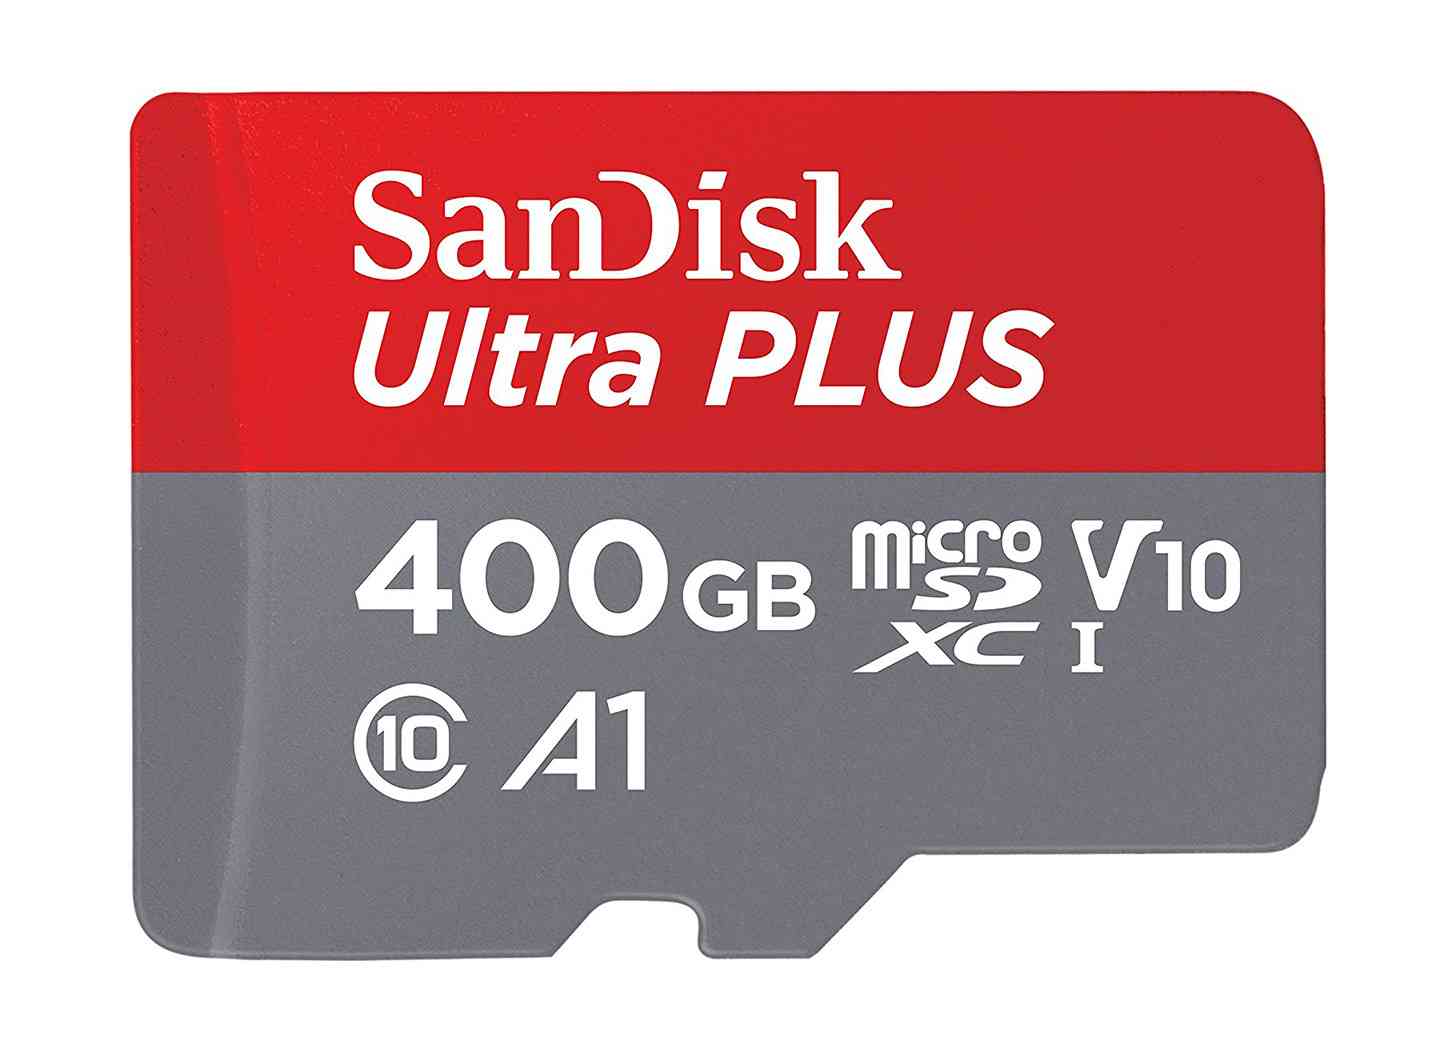 SanDisk 400GB microSD card official IFA 2017